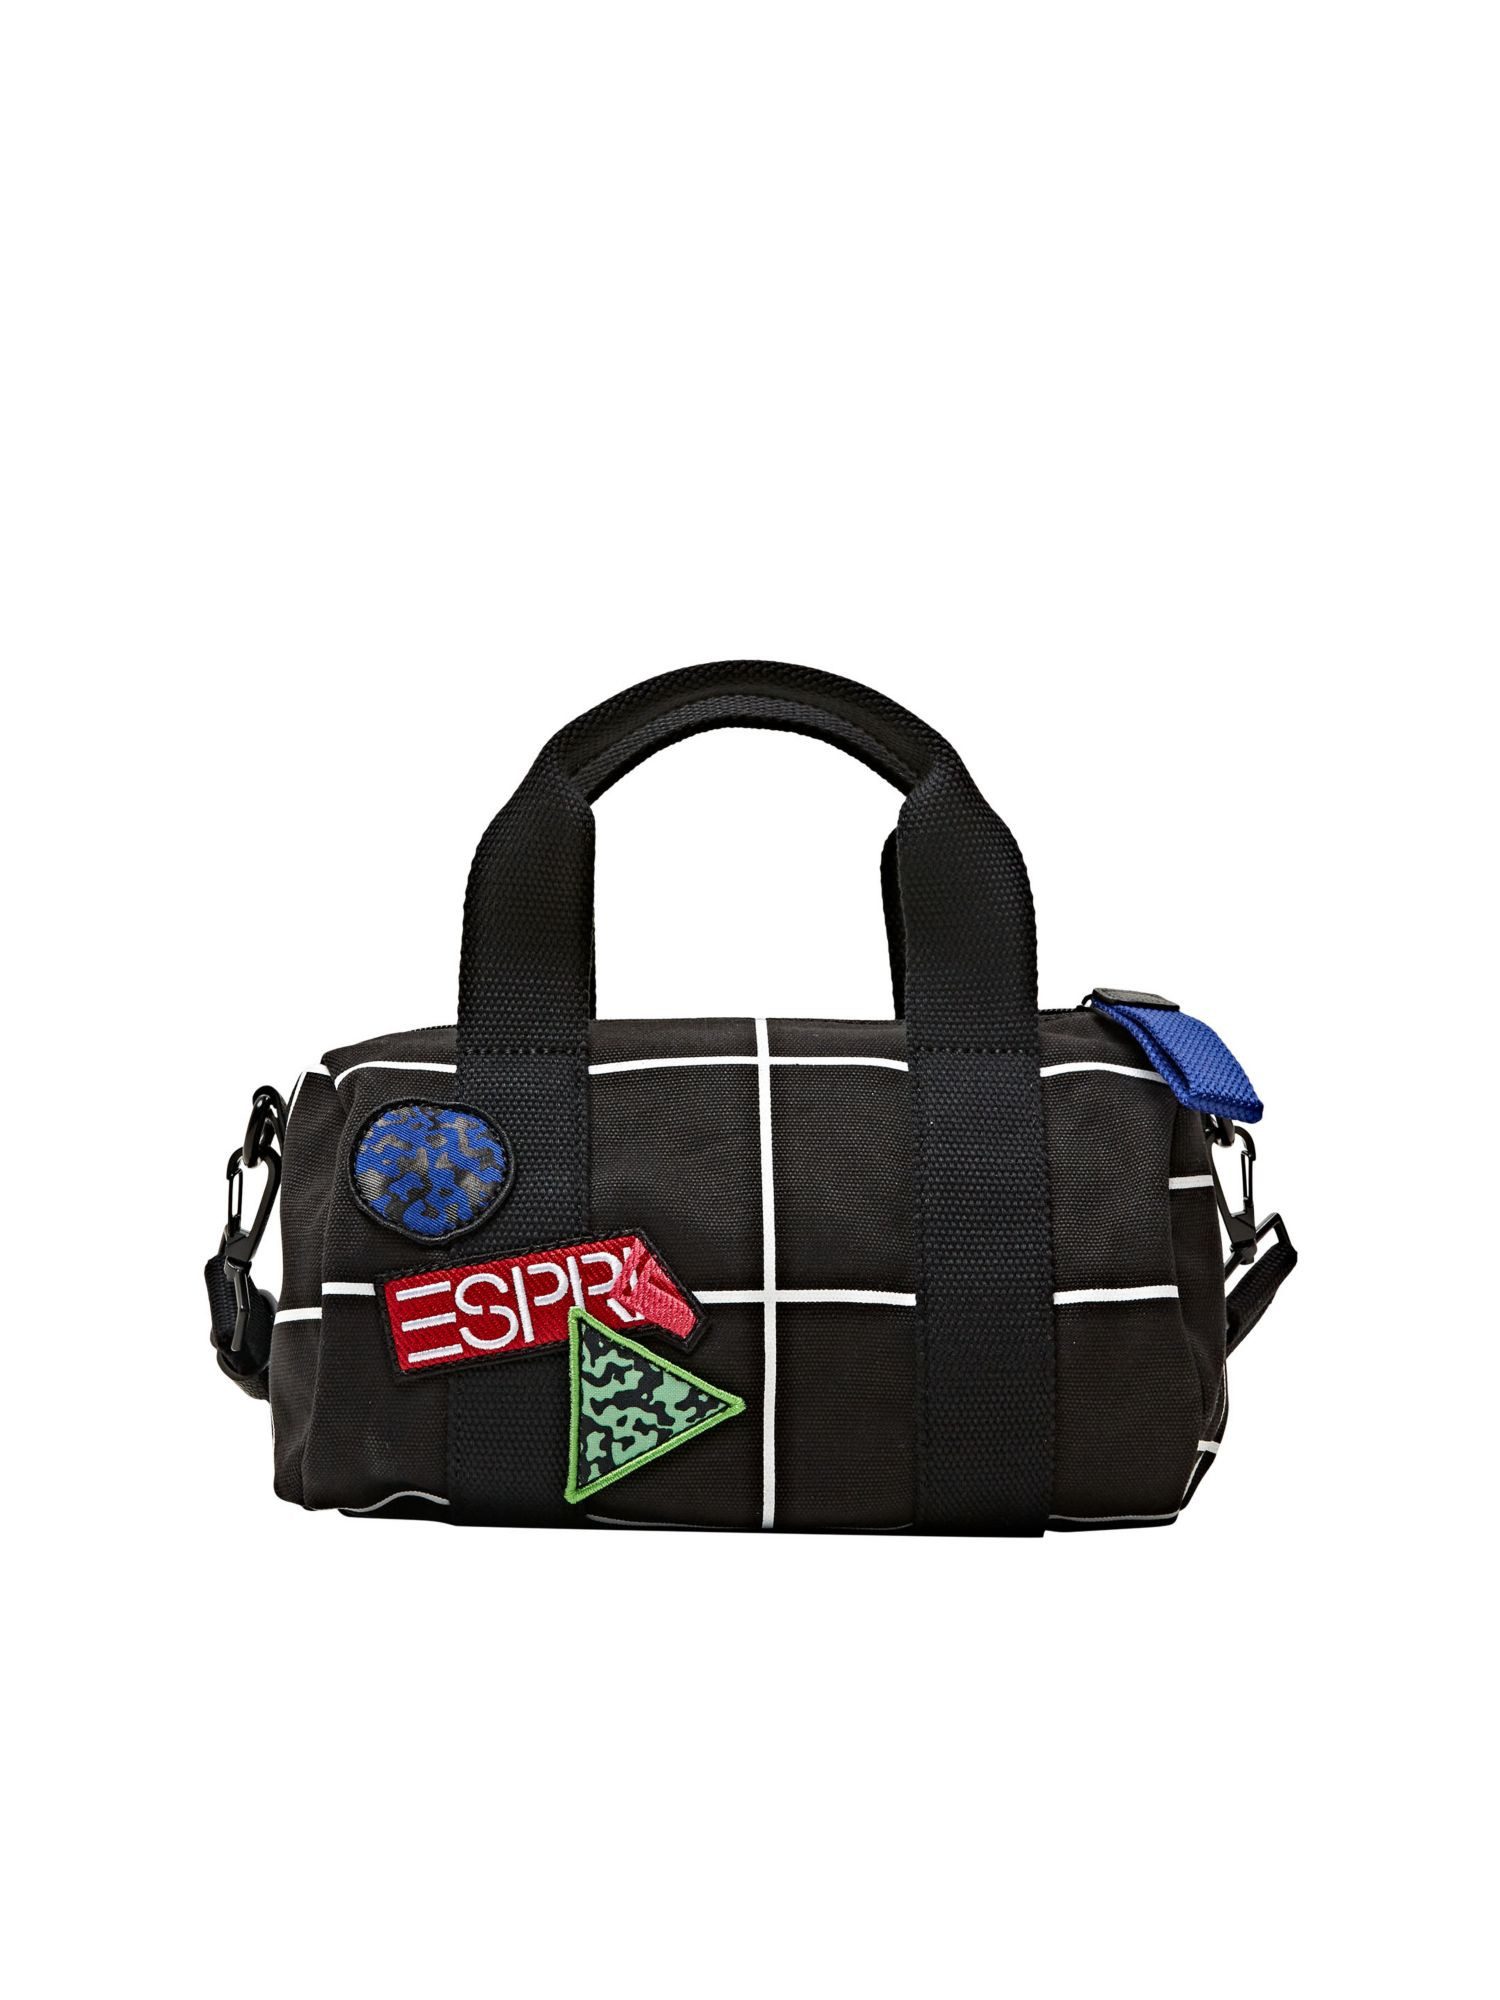 Esprit Handtasche Barrel Bag mit Logo-Gitter-Print